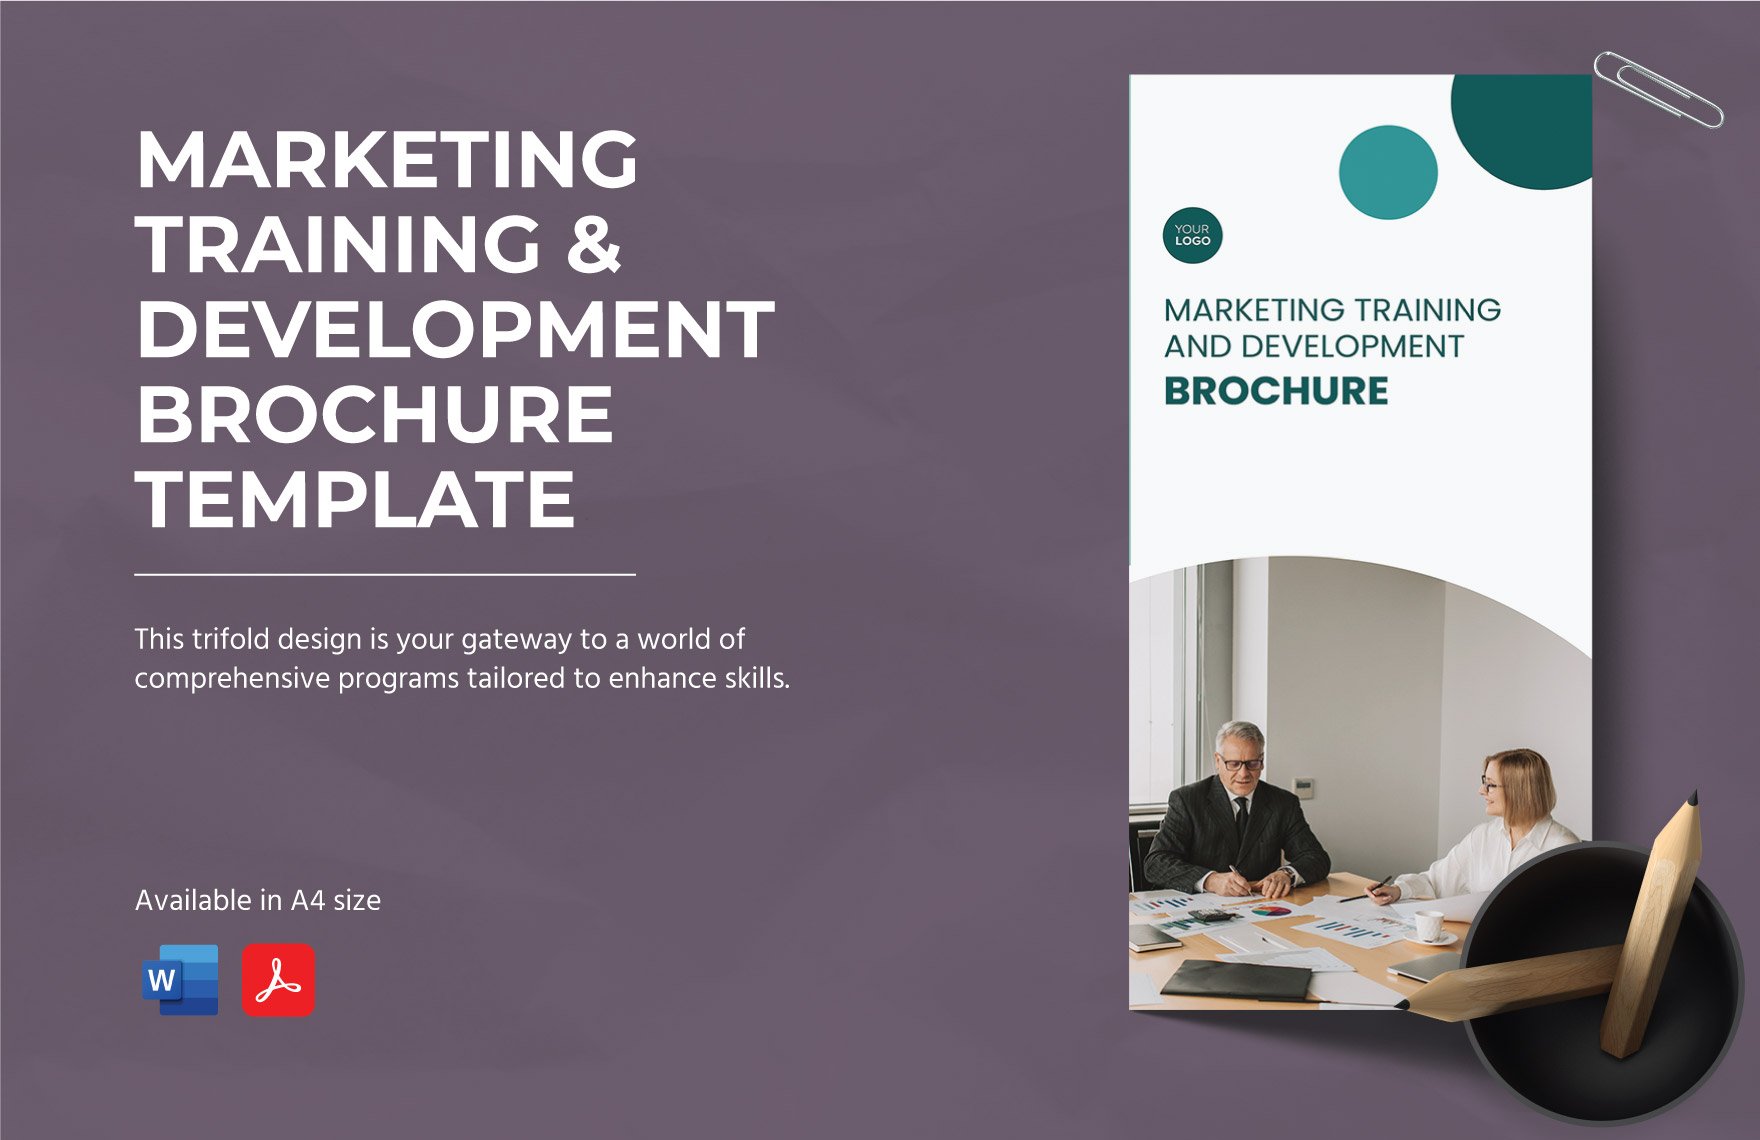 Marketing Training & Development Brochure Template